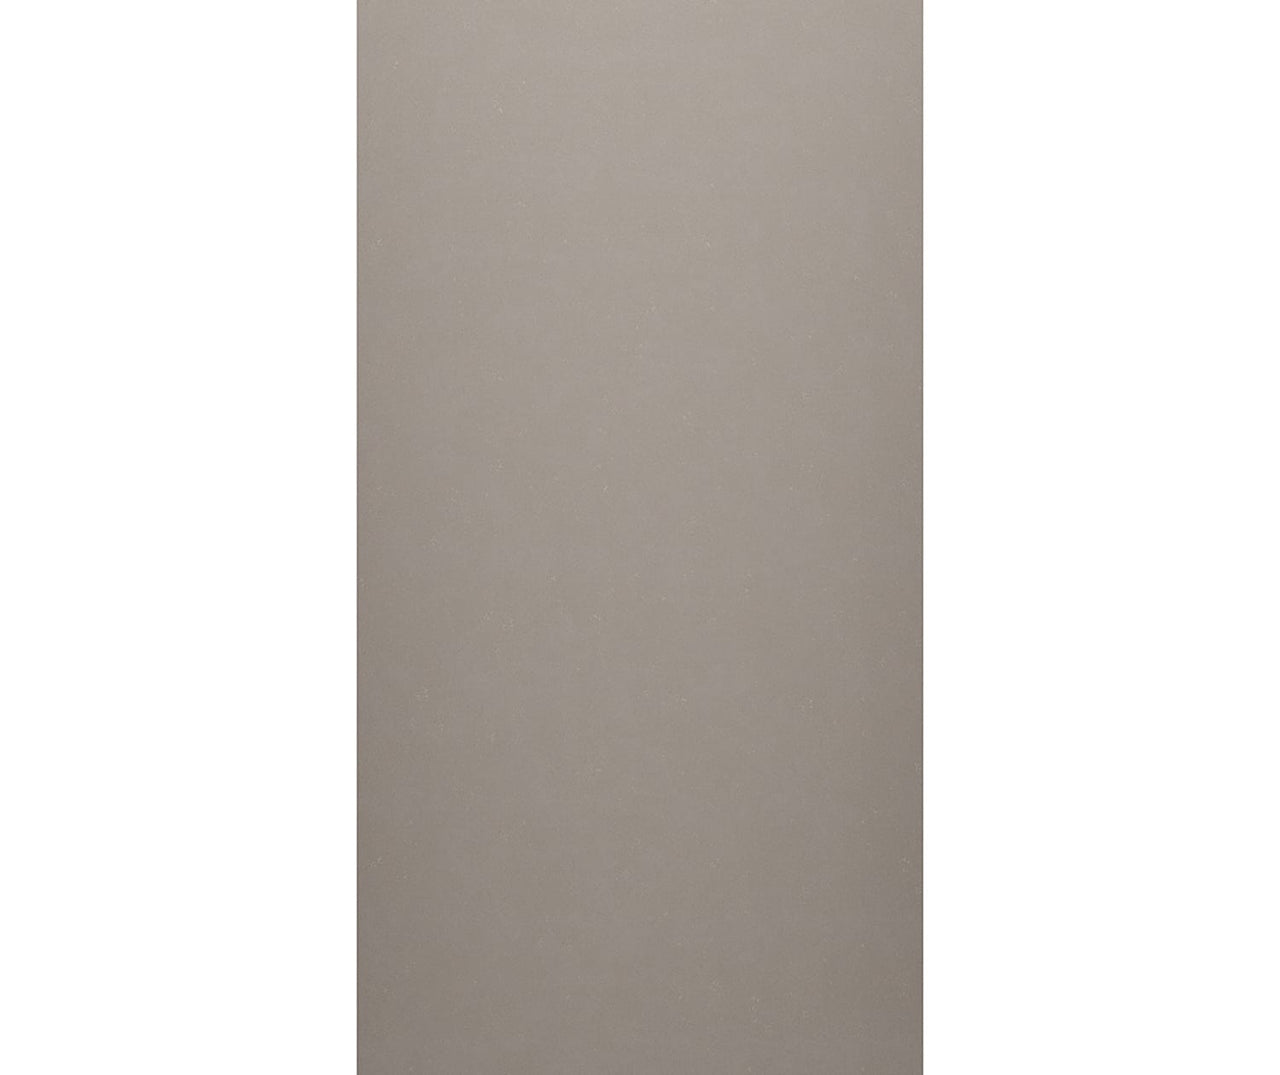 SMMK-8450-1 50 x 84 Swanstone Smooth Tile Glue up Bathtub and Shower Single Wall Panel  - BNGBath